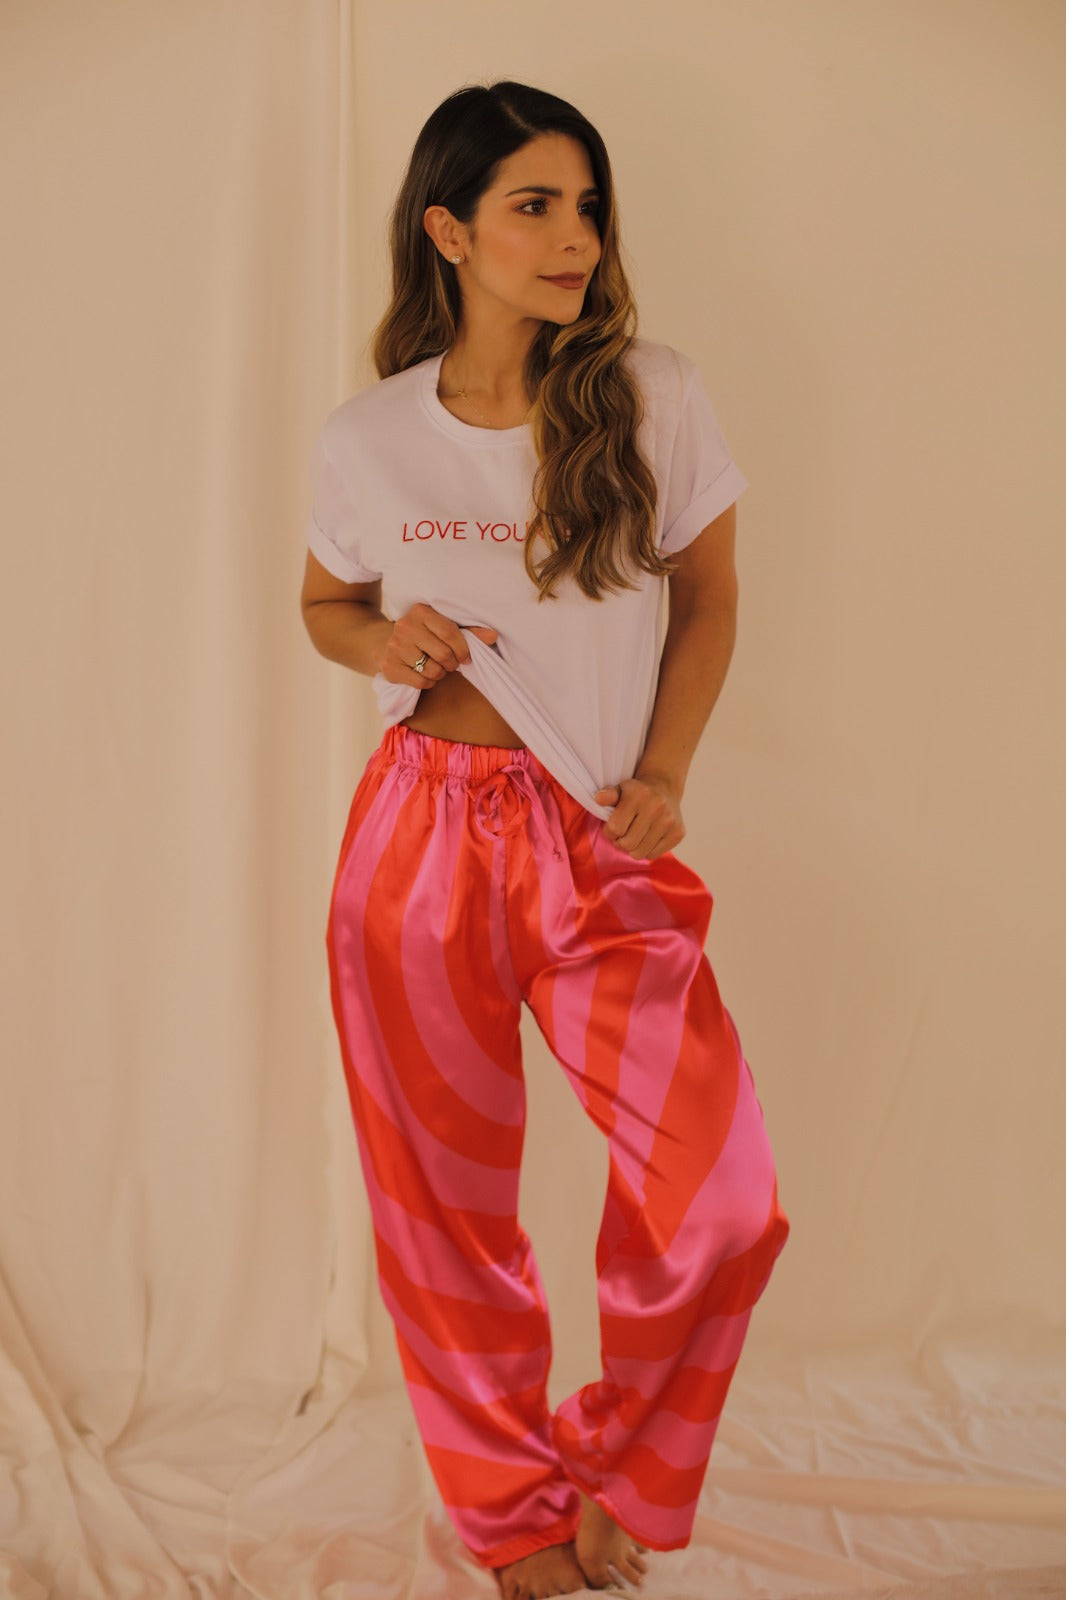 Pijama Pantalón Rojo - Fucsia  - Camiseta Algodón Love Yourself